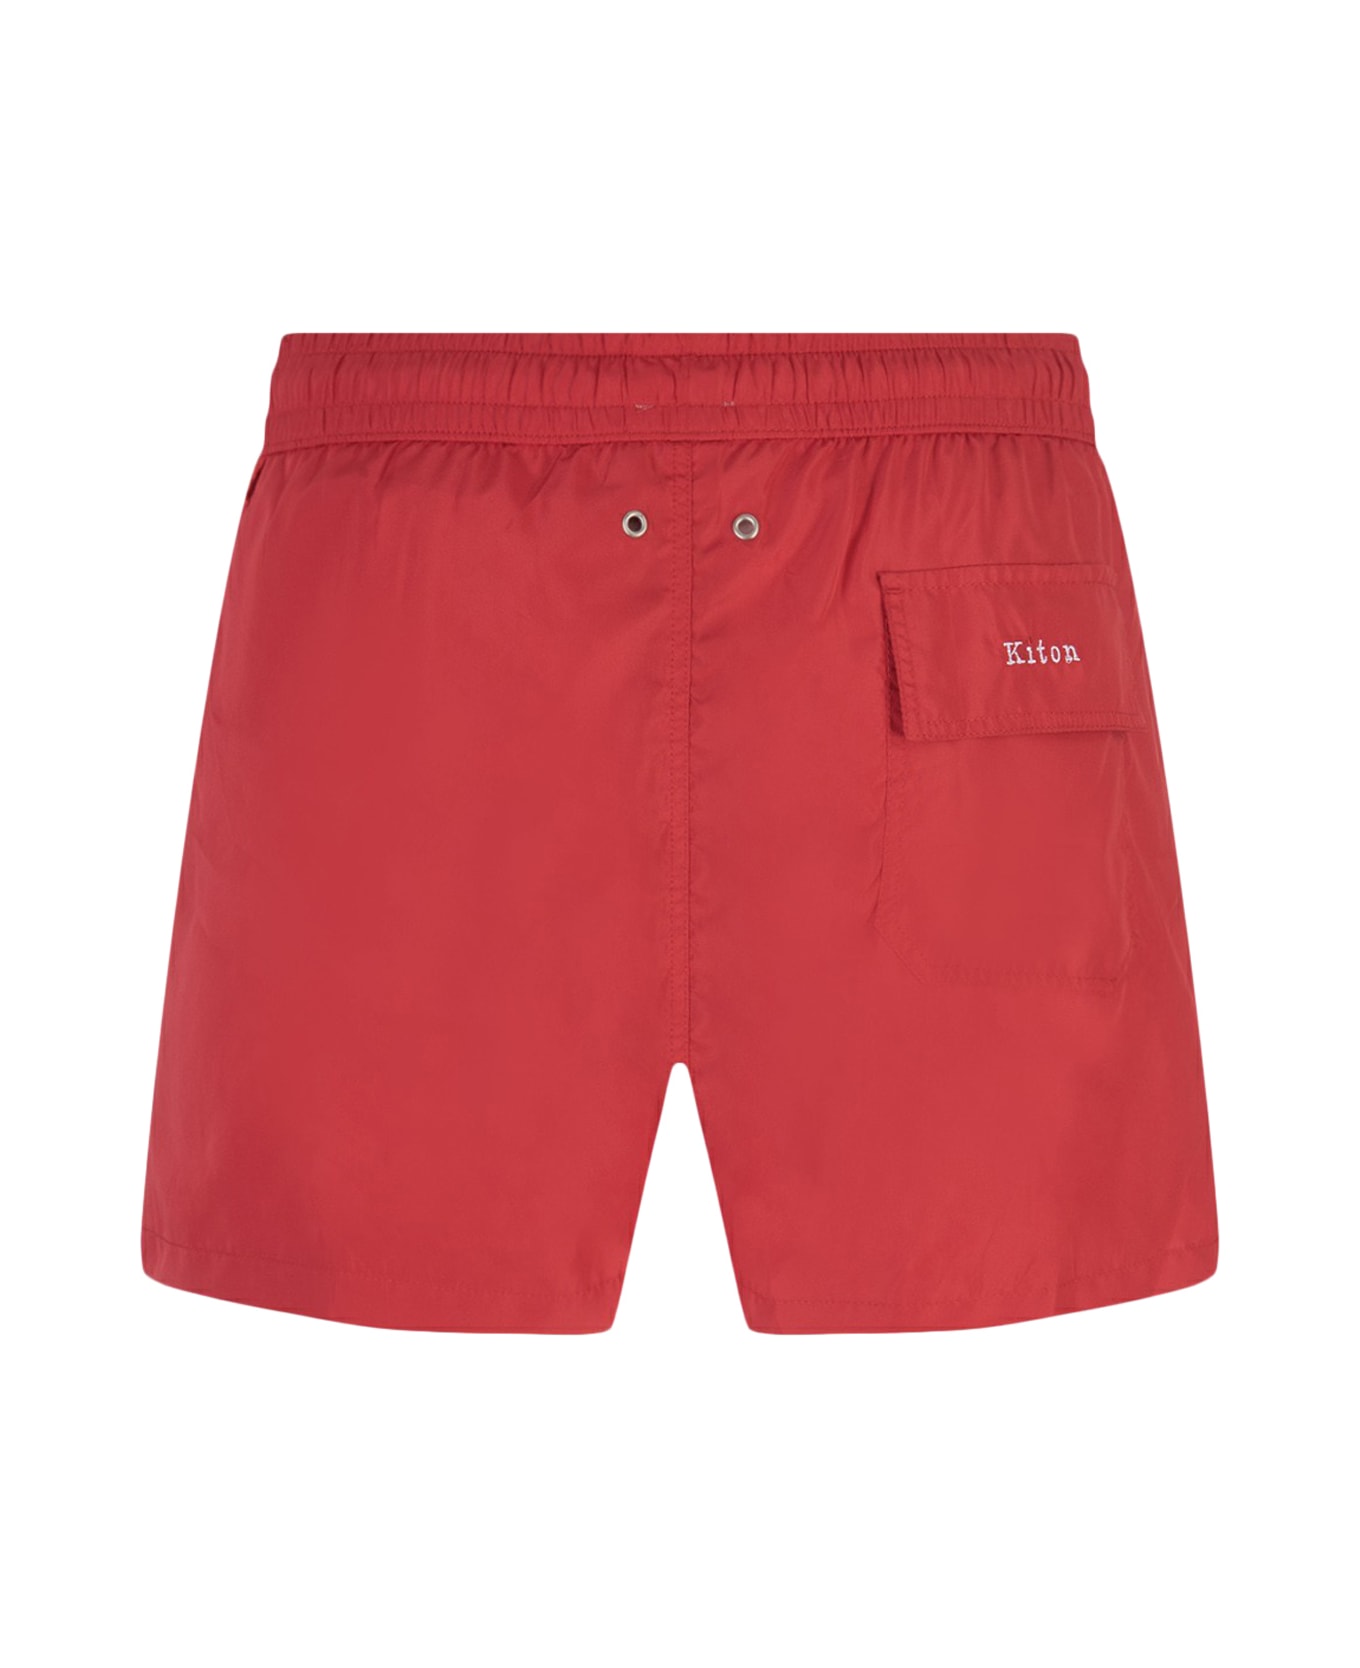 Kiton Swimwear Boxer - Red